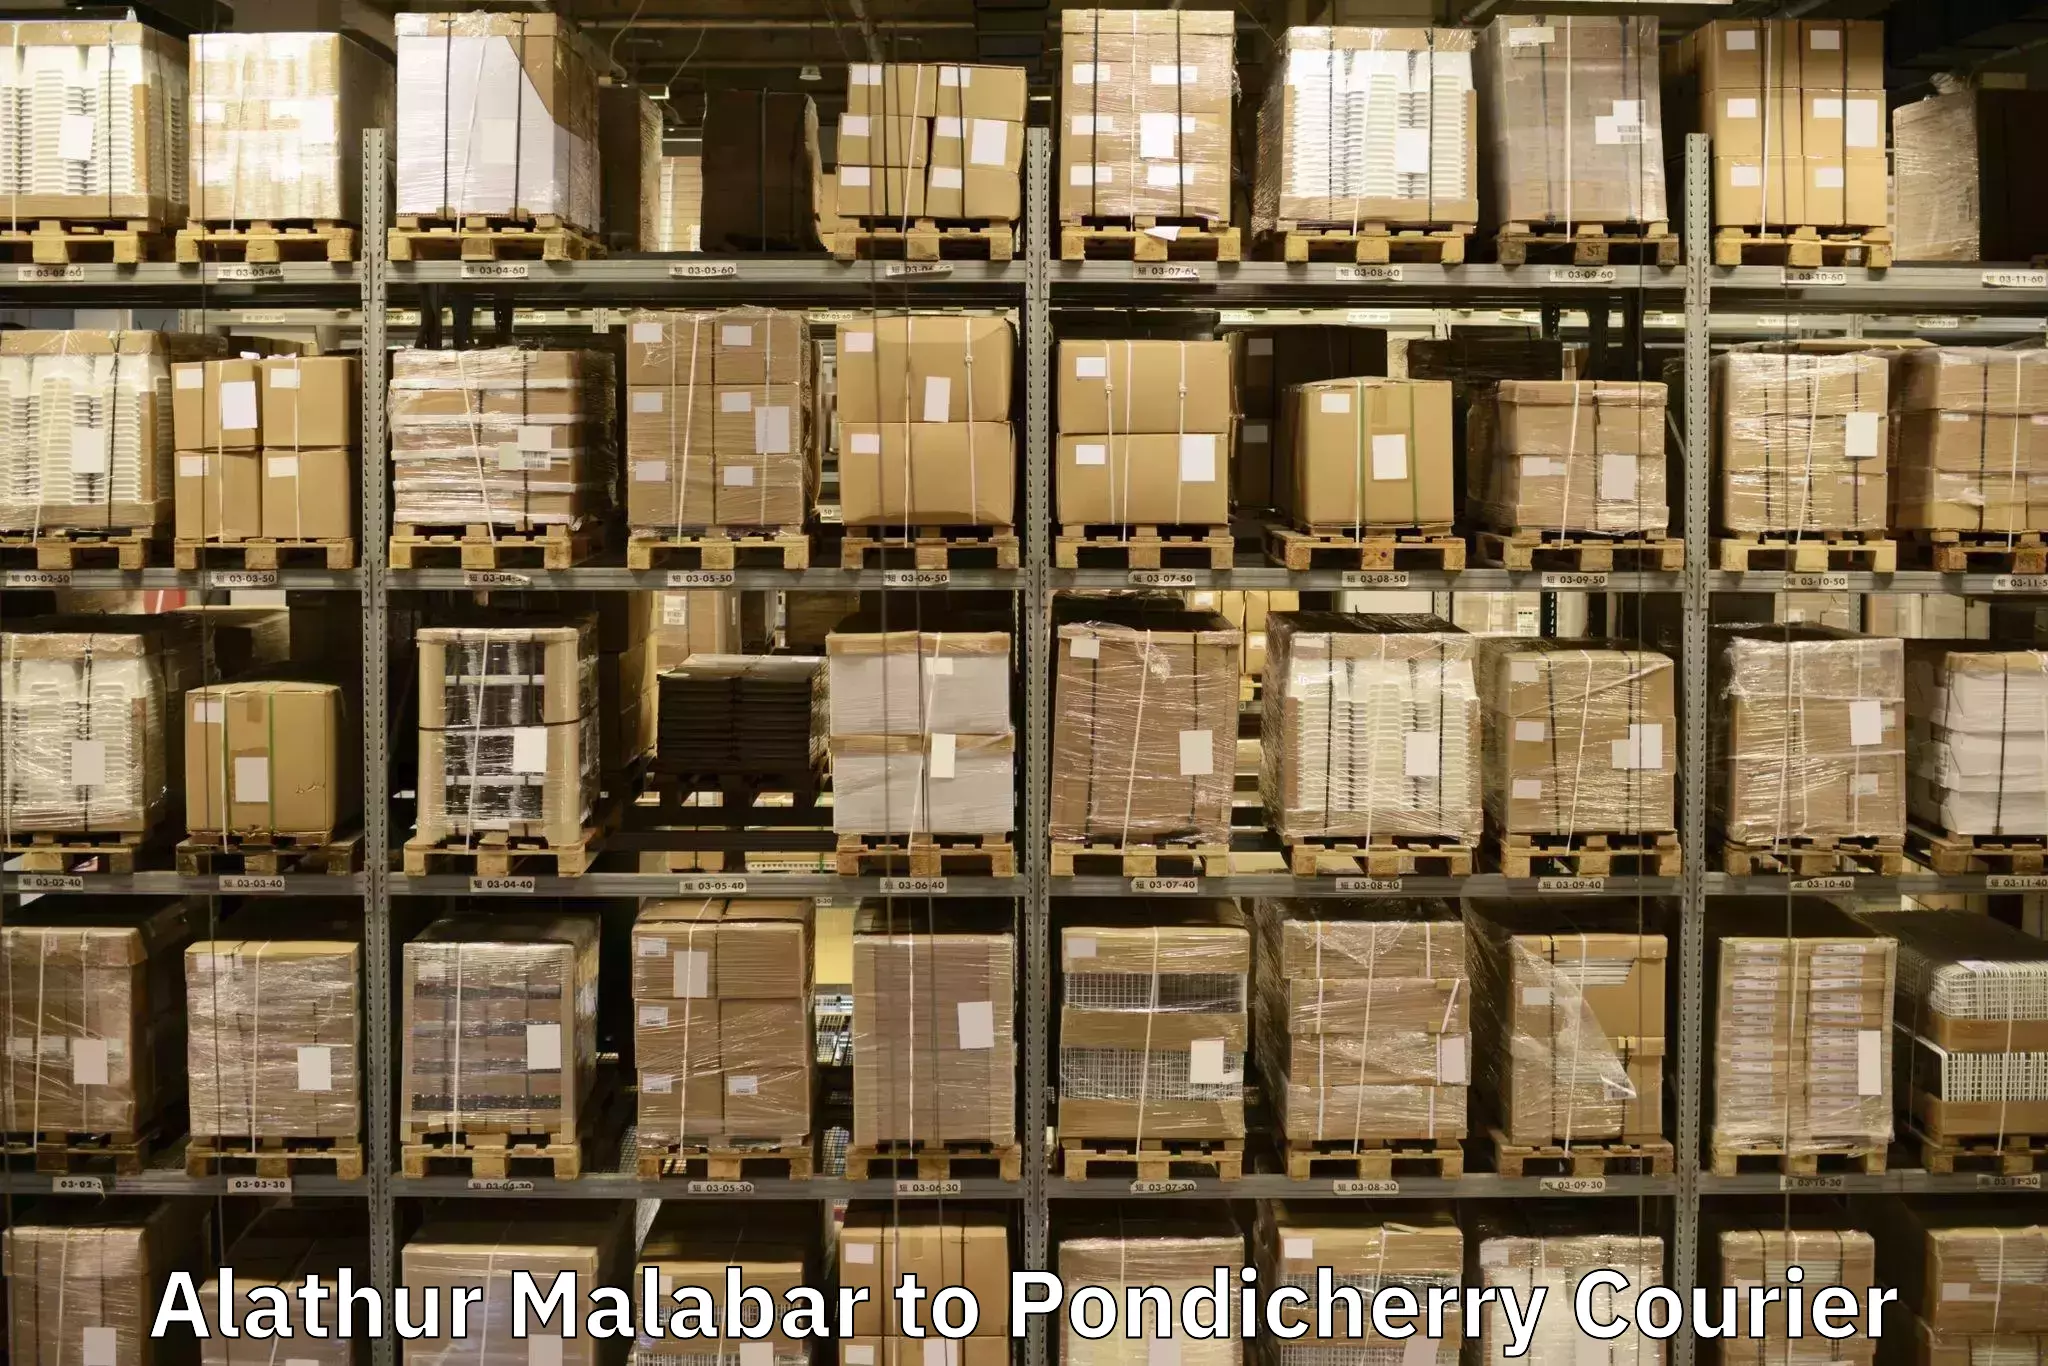 Quality moving company Alathur Malabar to Pondicherry